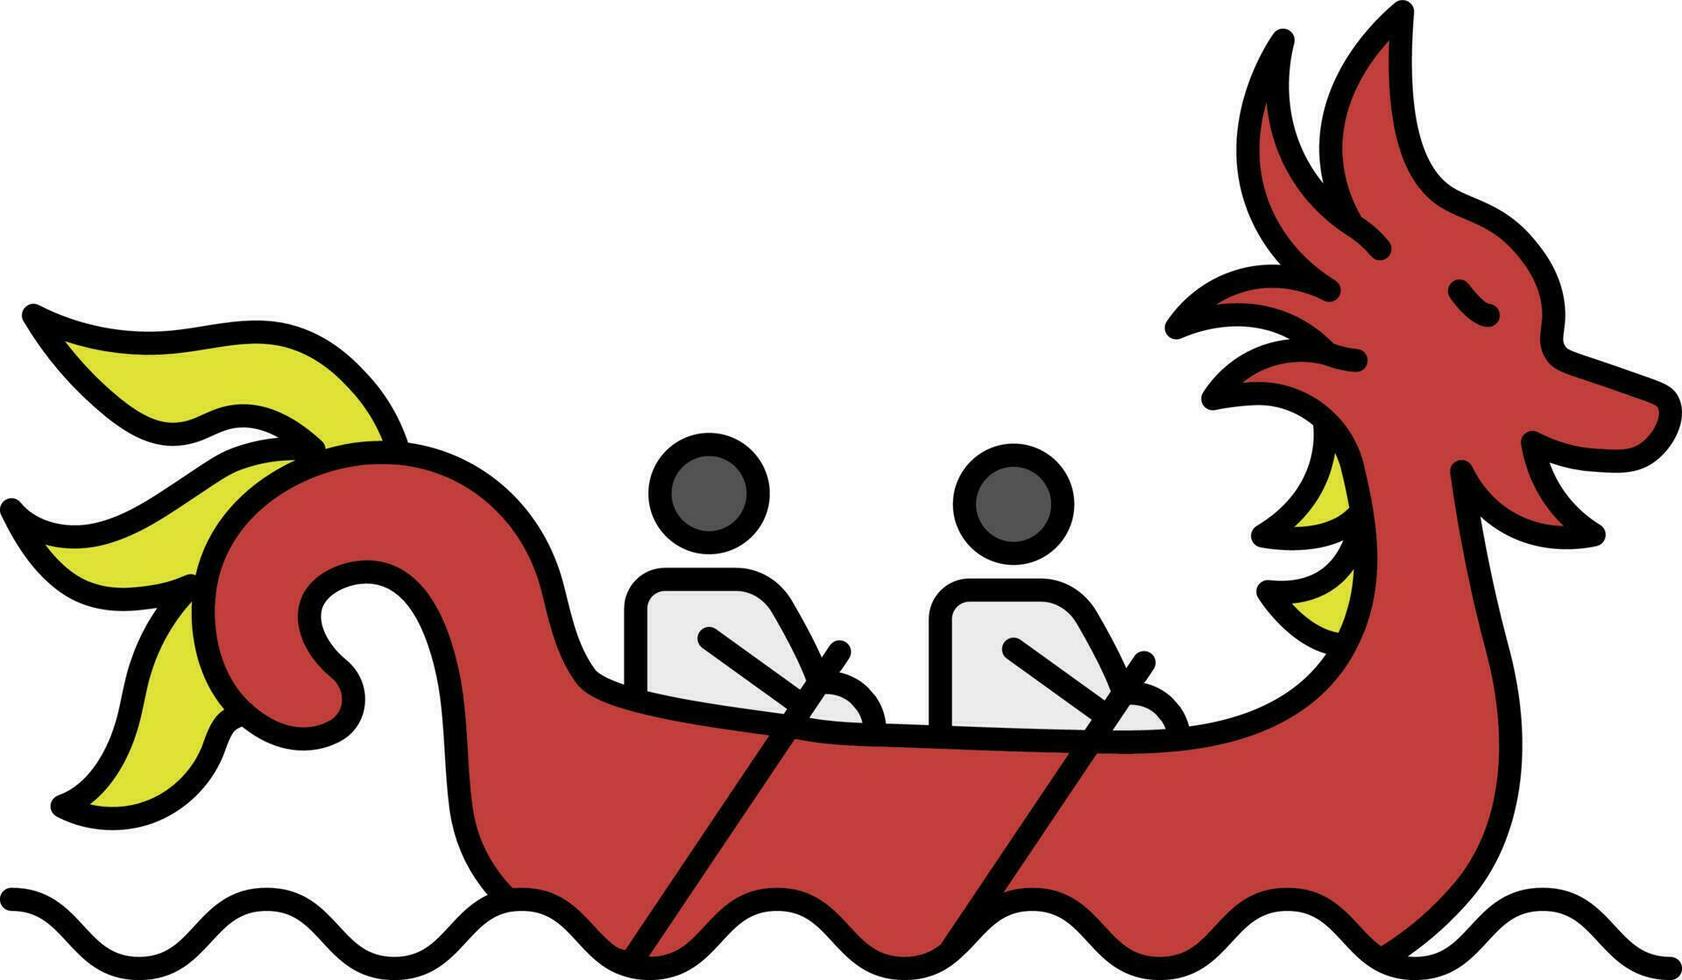 plano ilustración de personas paseo en barco continuar barco vistoso icono. vector